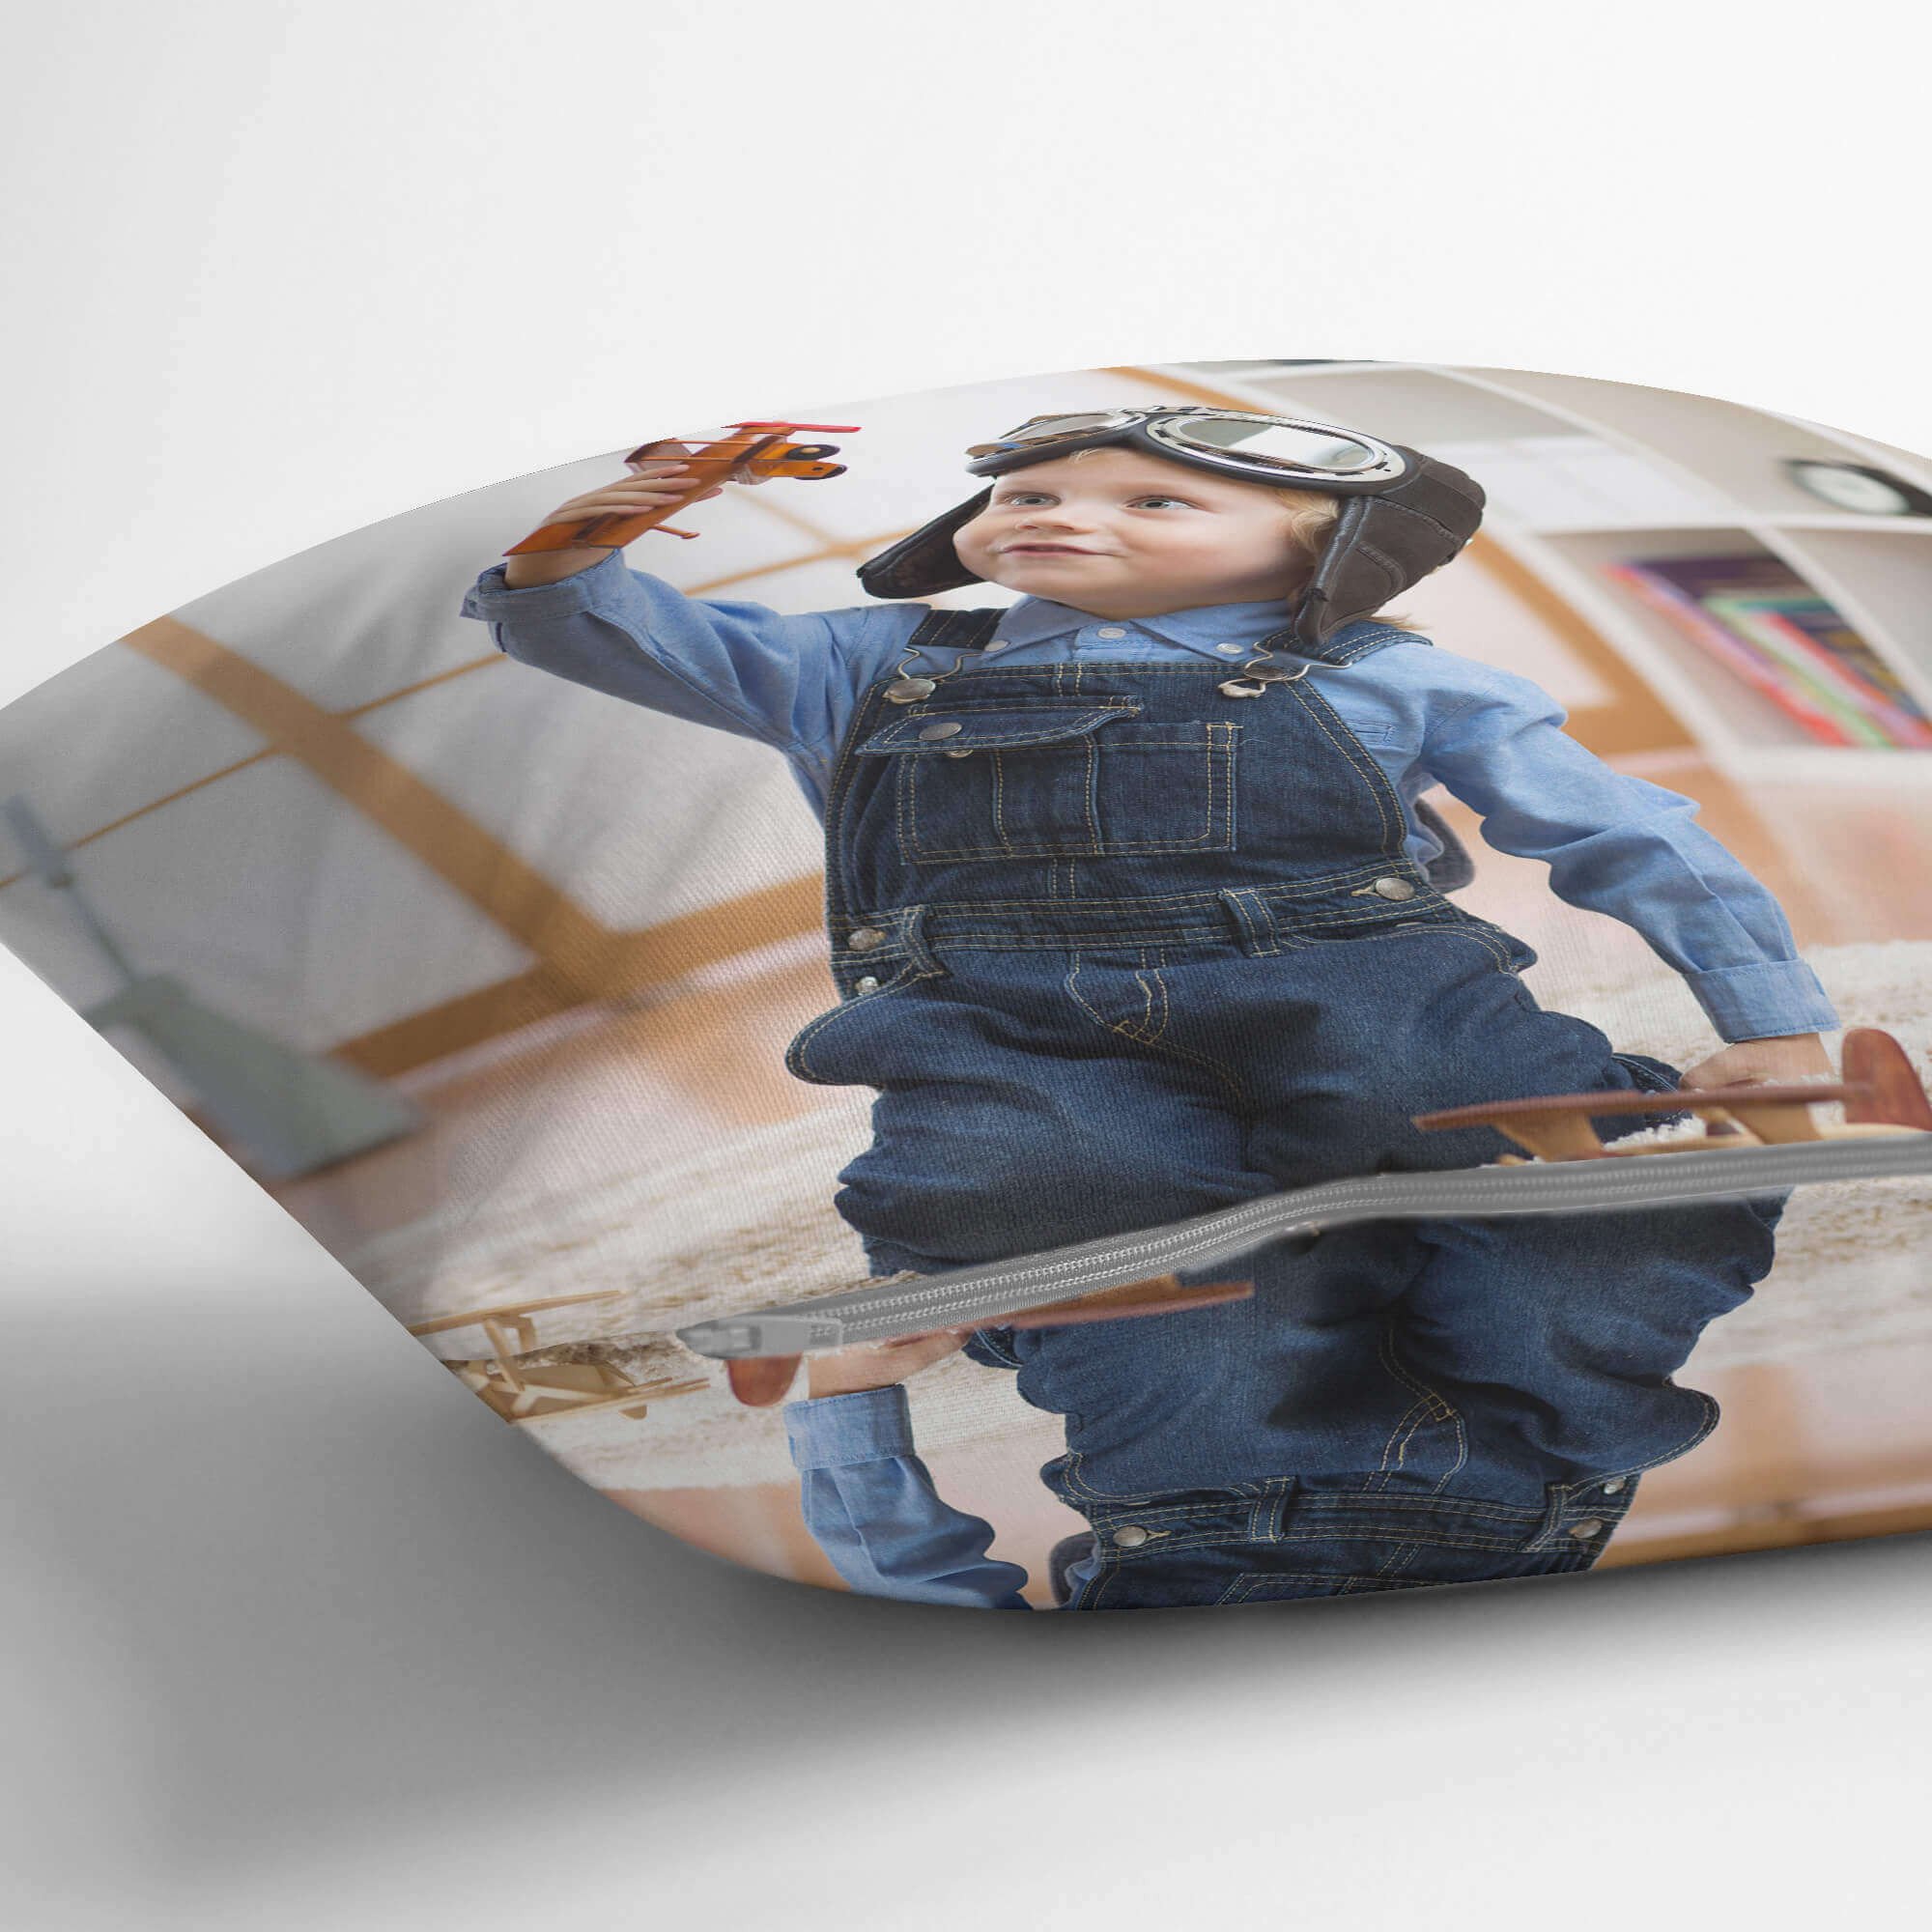 personalised Double Sided Photo Cushion 18x18"